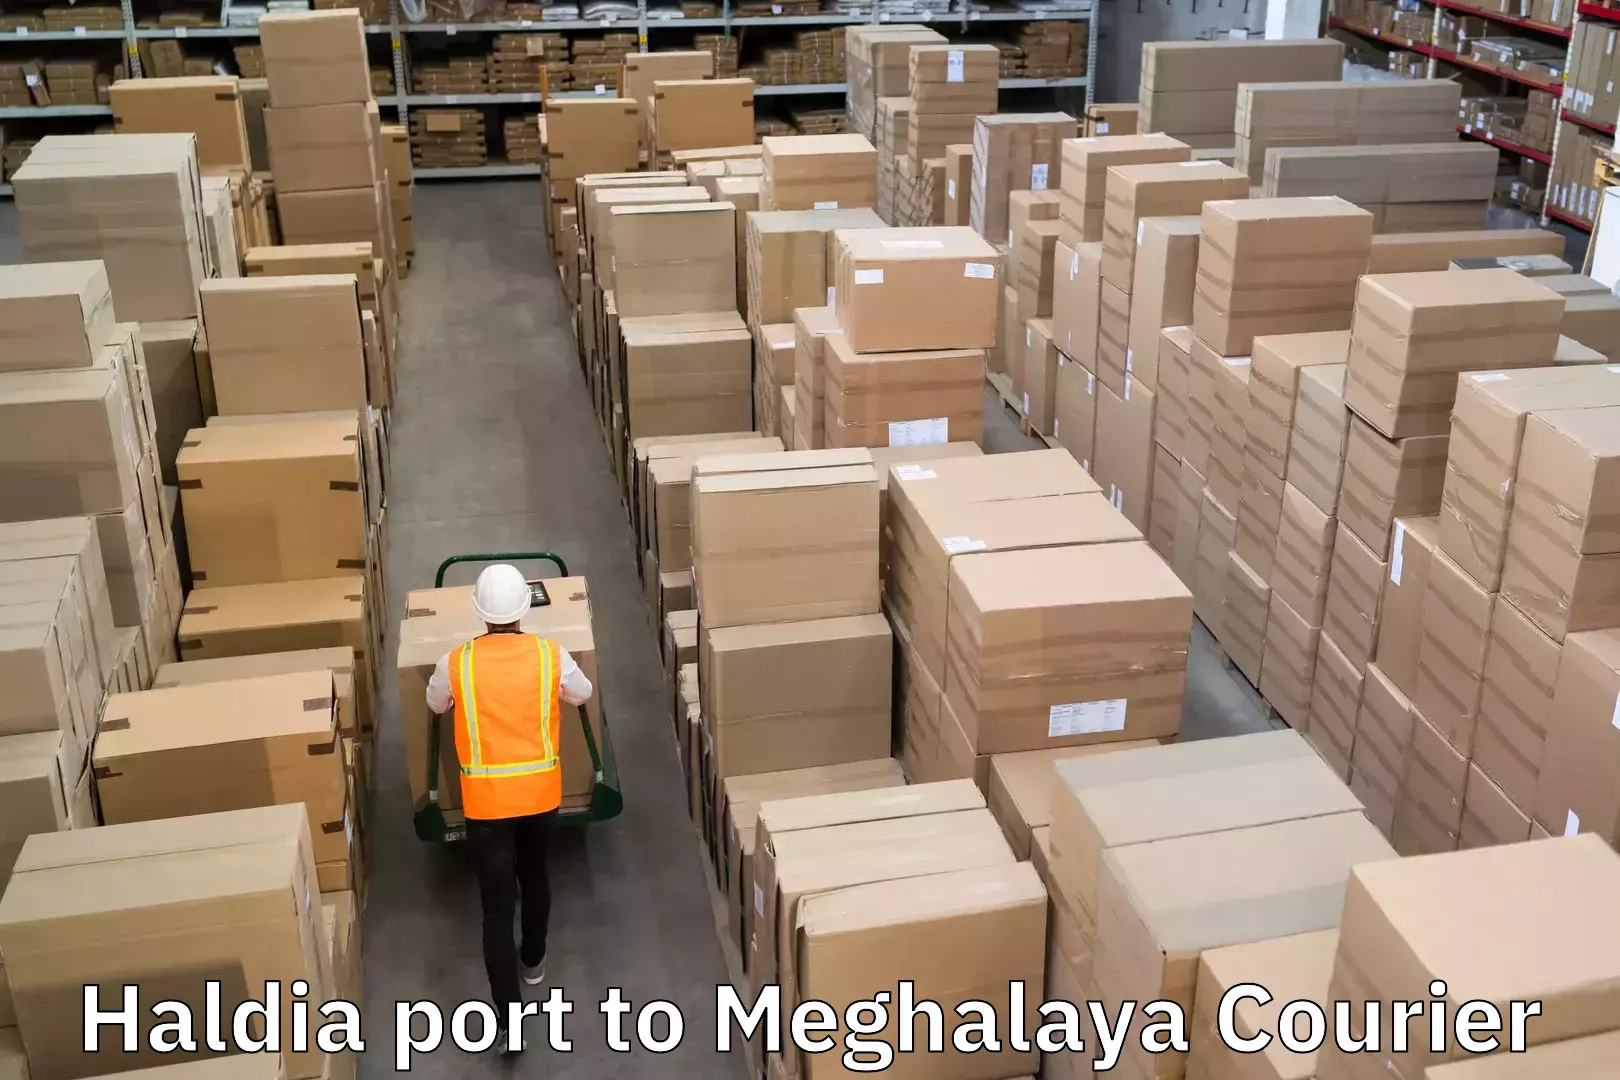 Global courier networks Haldia port to Cherrapunji